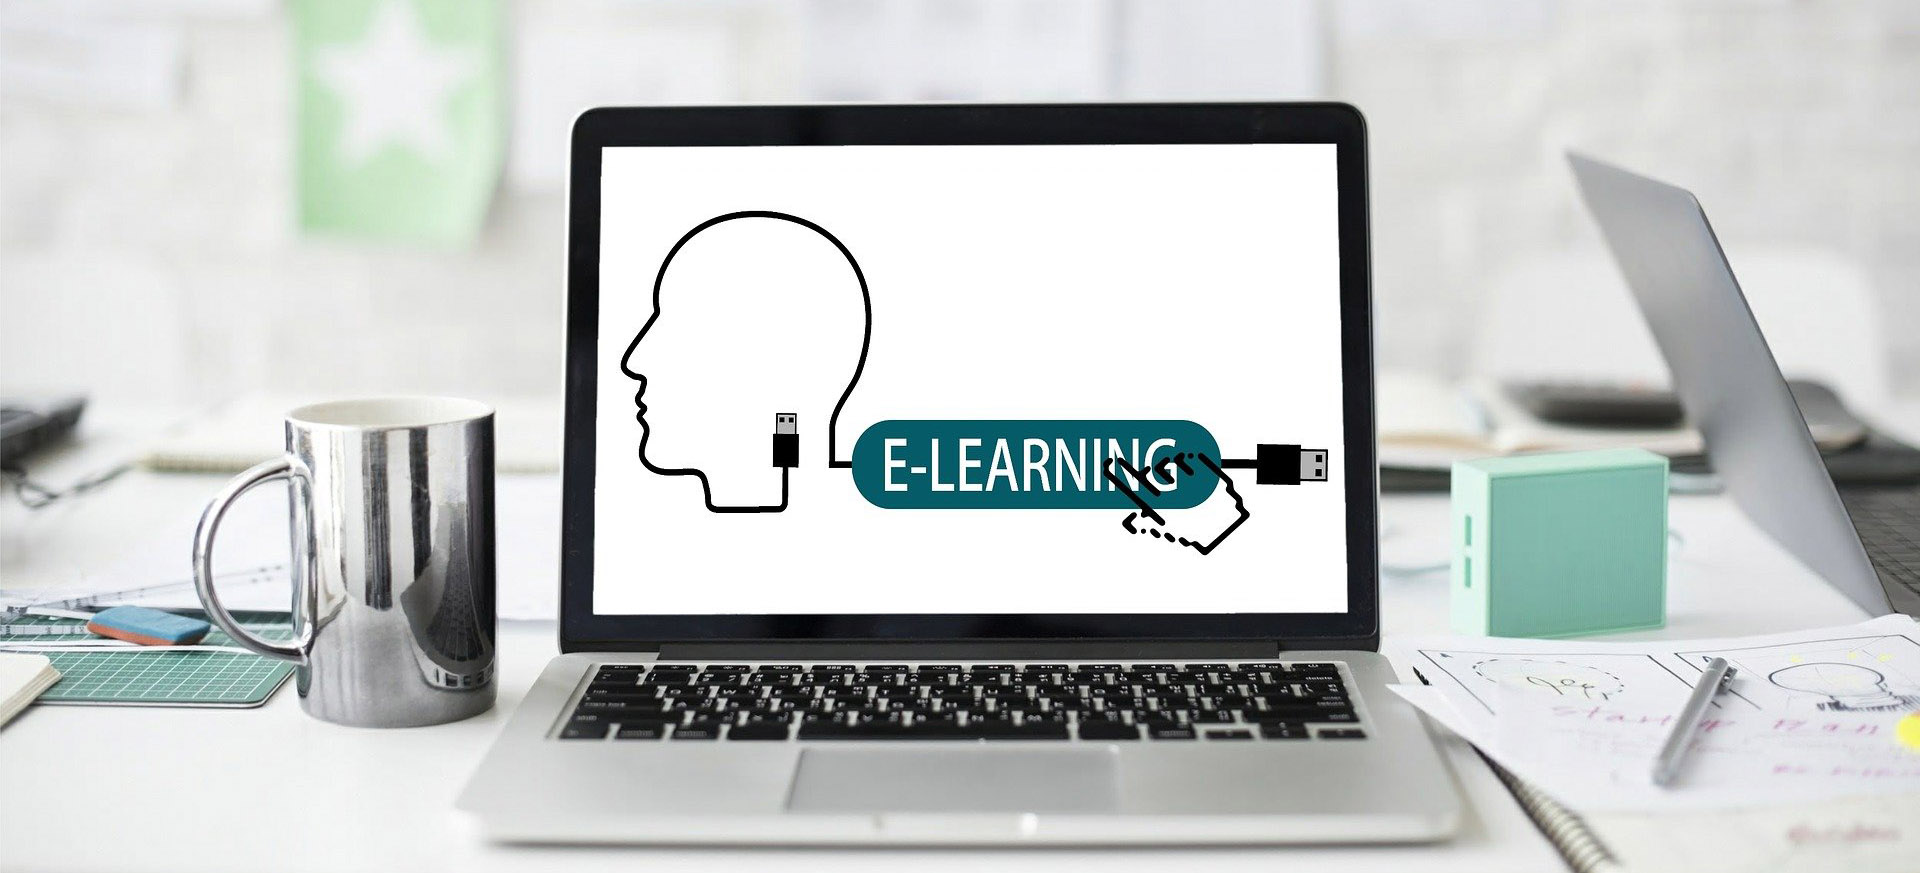 e-learning logo monitor